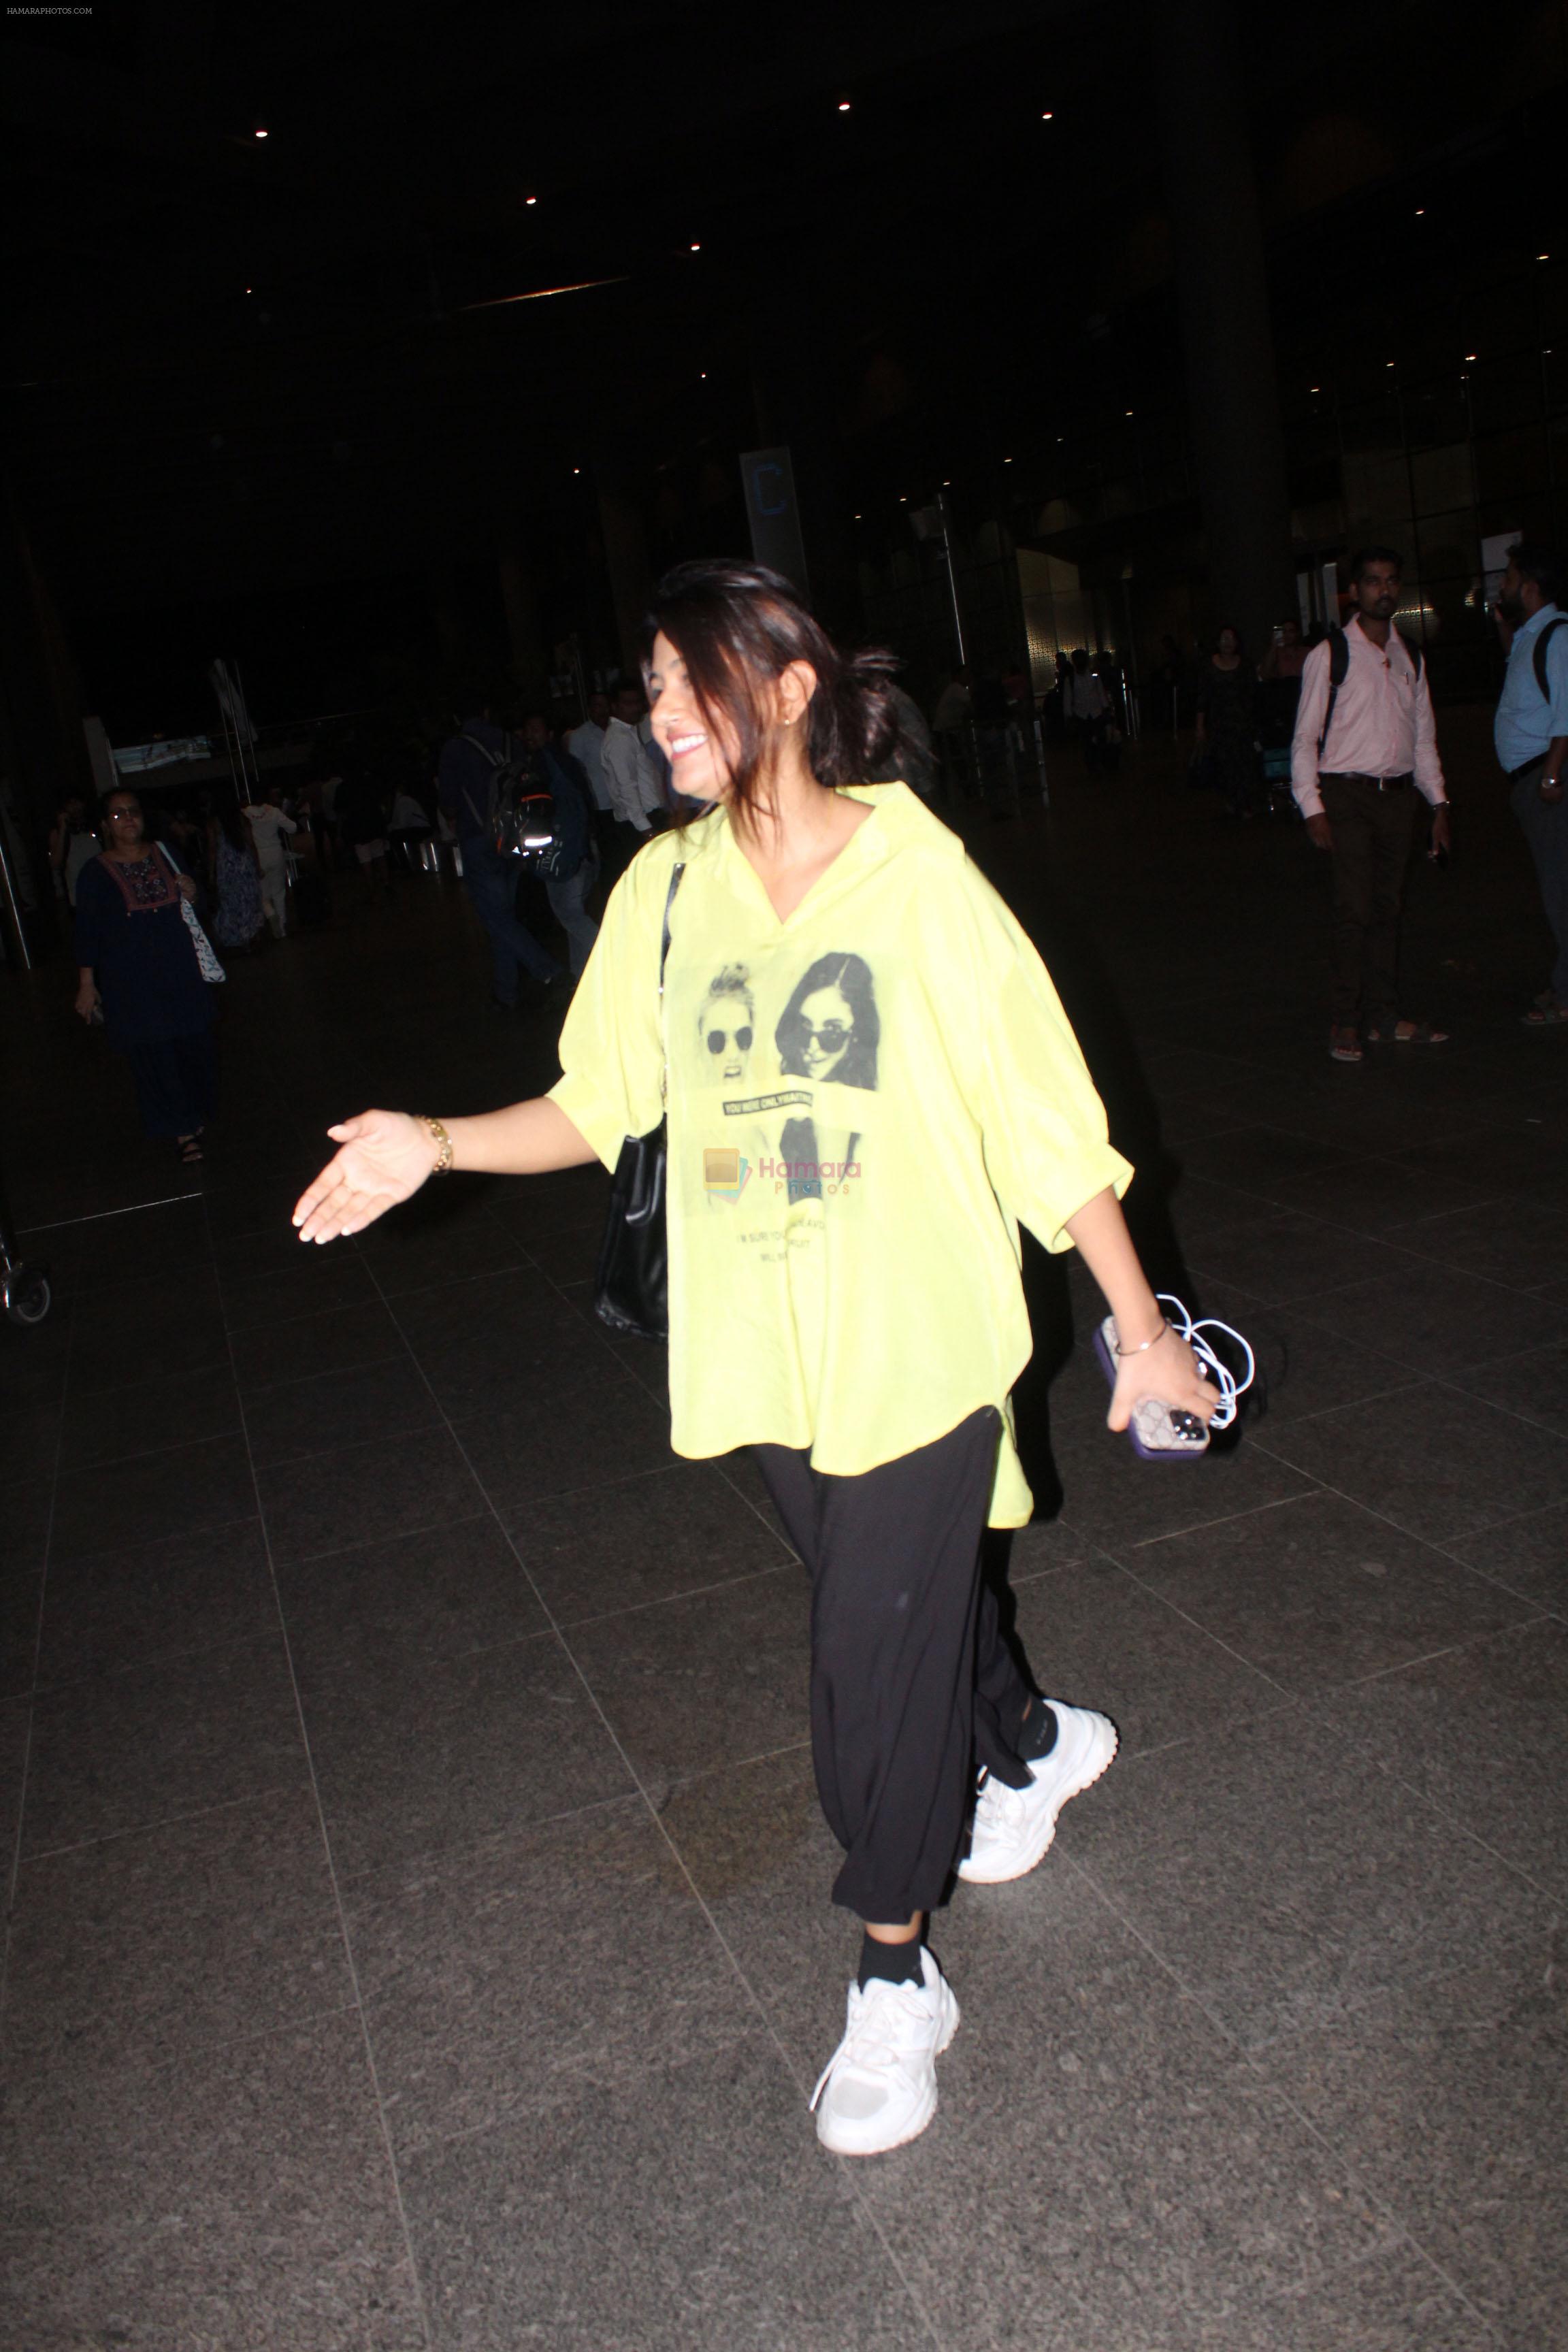 Anjali Arora dressed in yellow top and black pant at airport on 15 Jun 2023